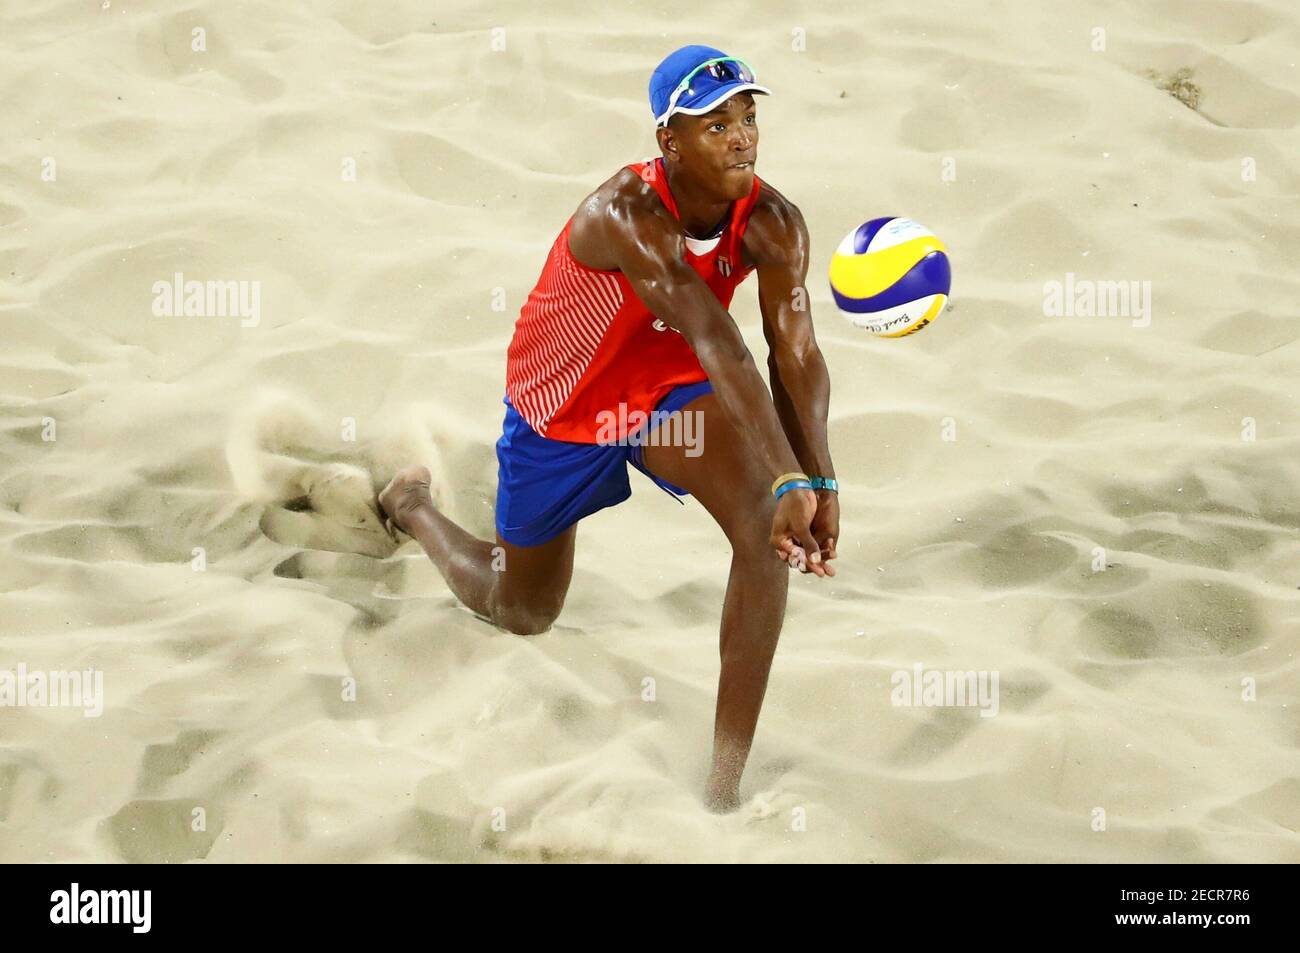 2016 Rio - Beach Volleyball - Men's Preliminary - Beach Volleyball Arena - Rio de Janeiro, Brazil - 07/08/2016. Nivaldo (CUB) of Cuba competes. REUTERS/Lucy Nicholson FOR EDITORIAL USE ONLY.